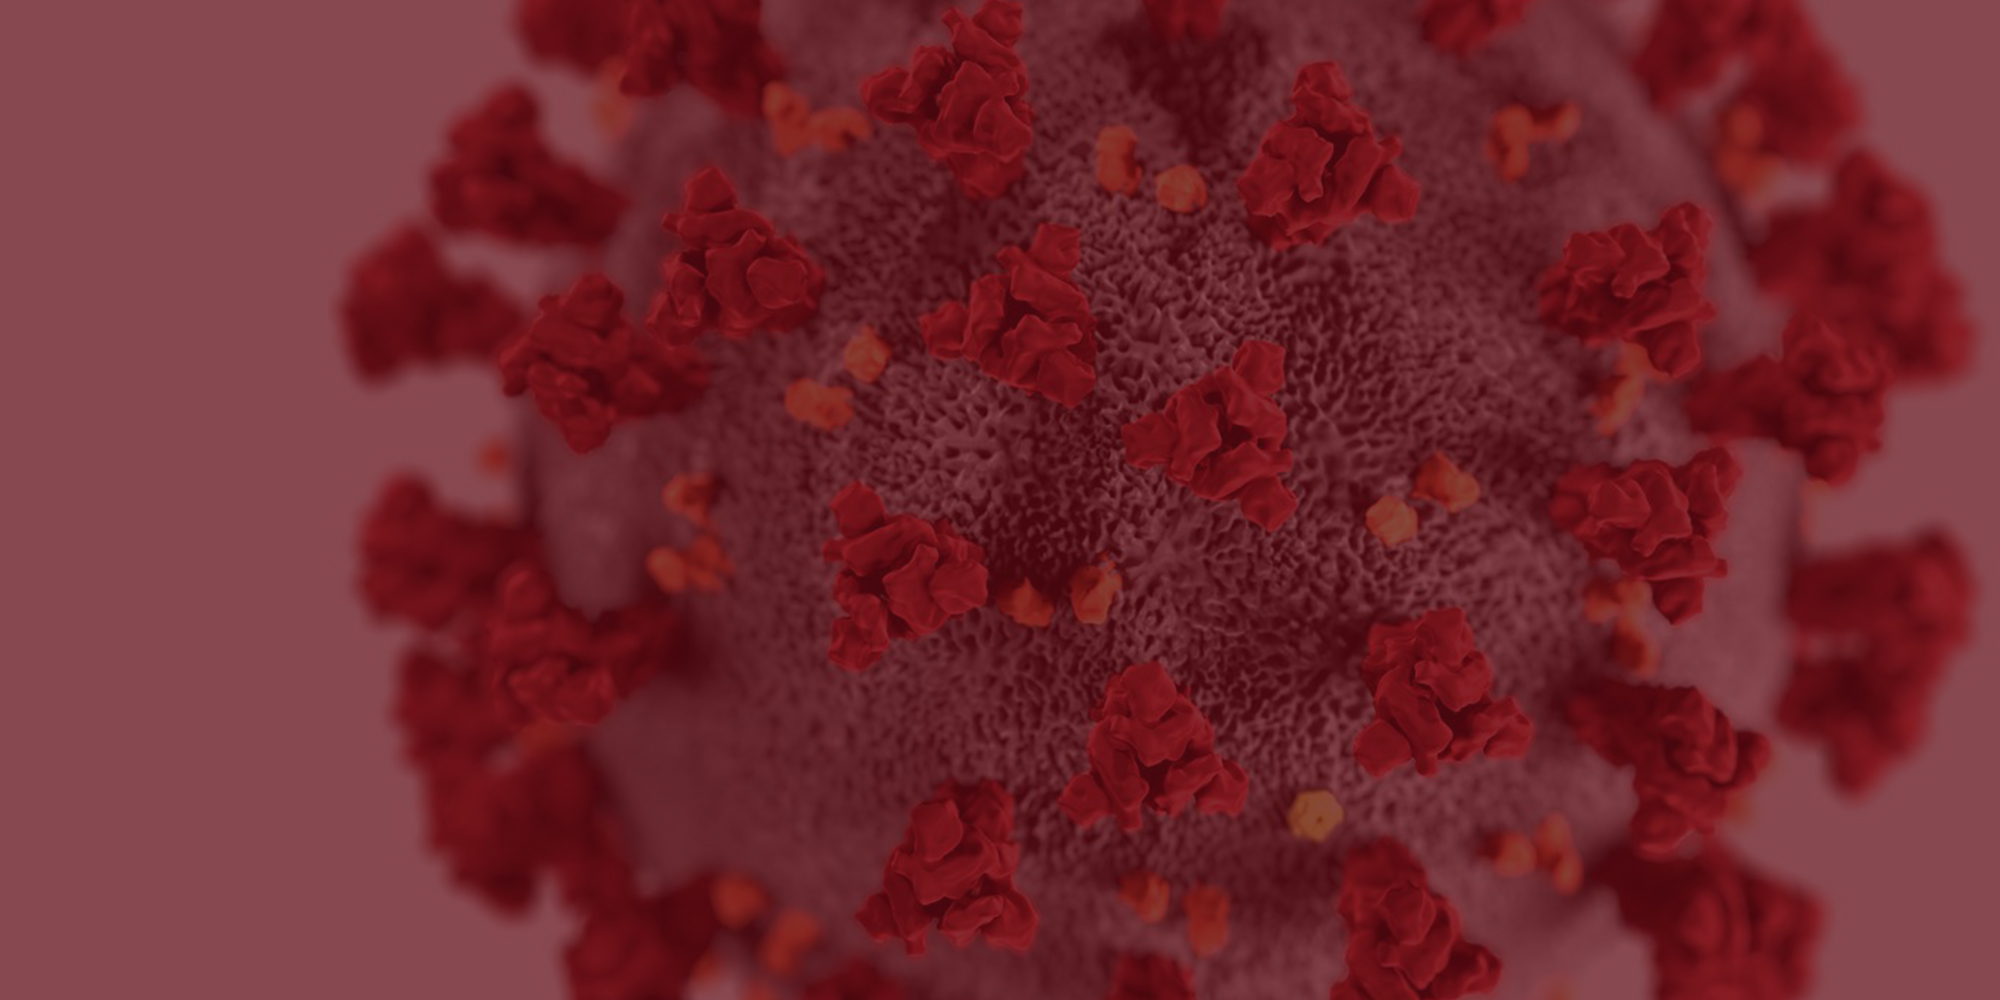 A close-up of a coronavirus.